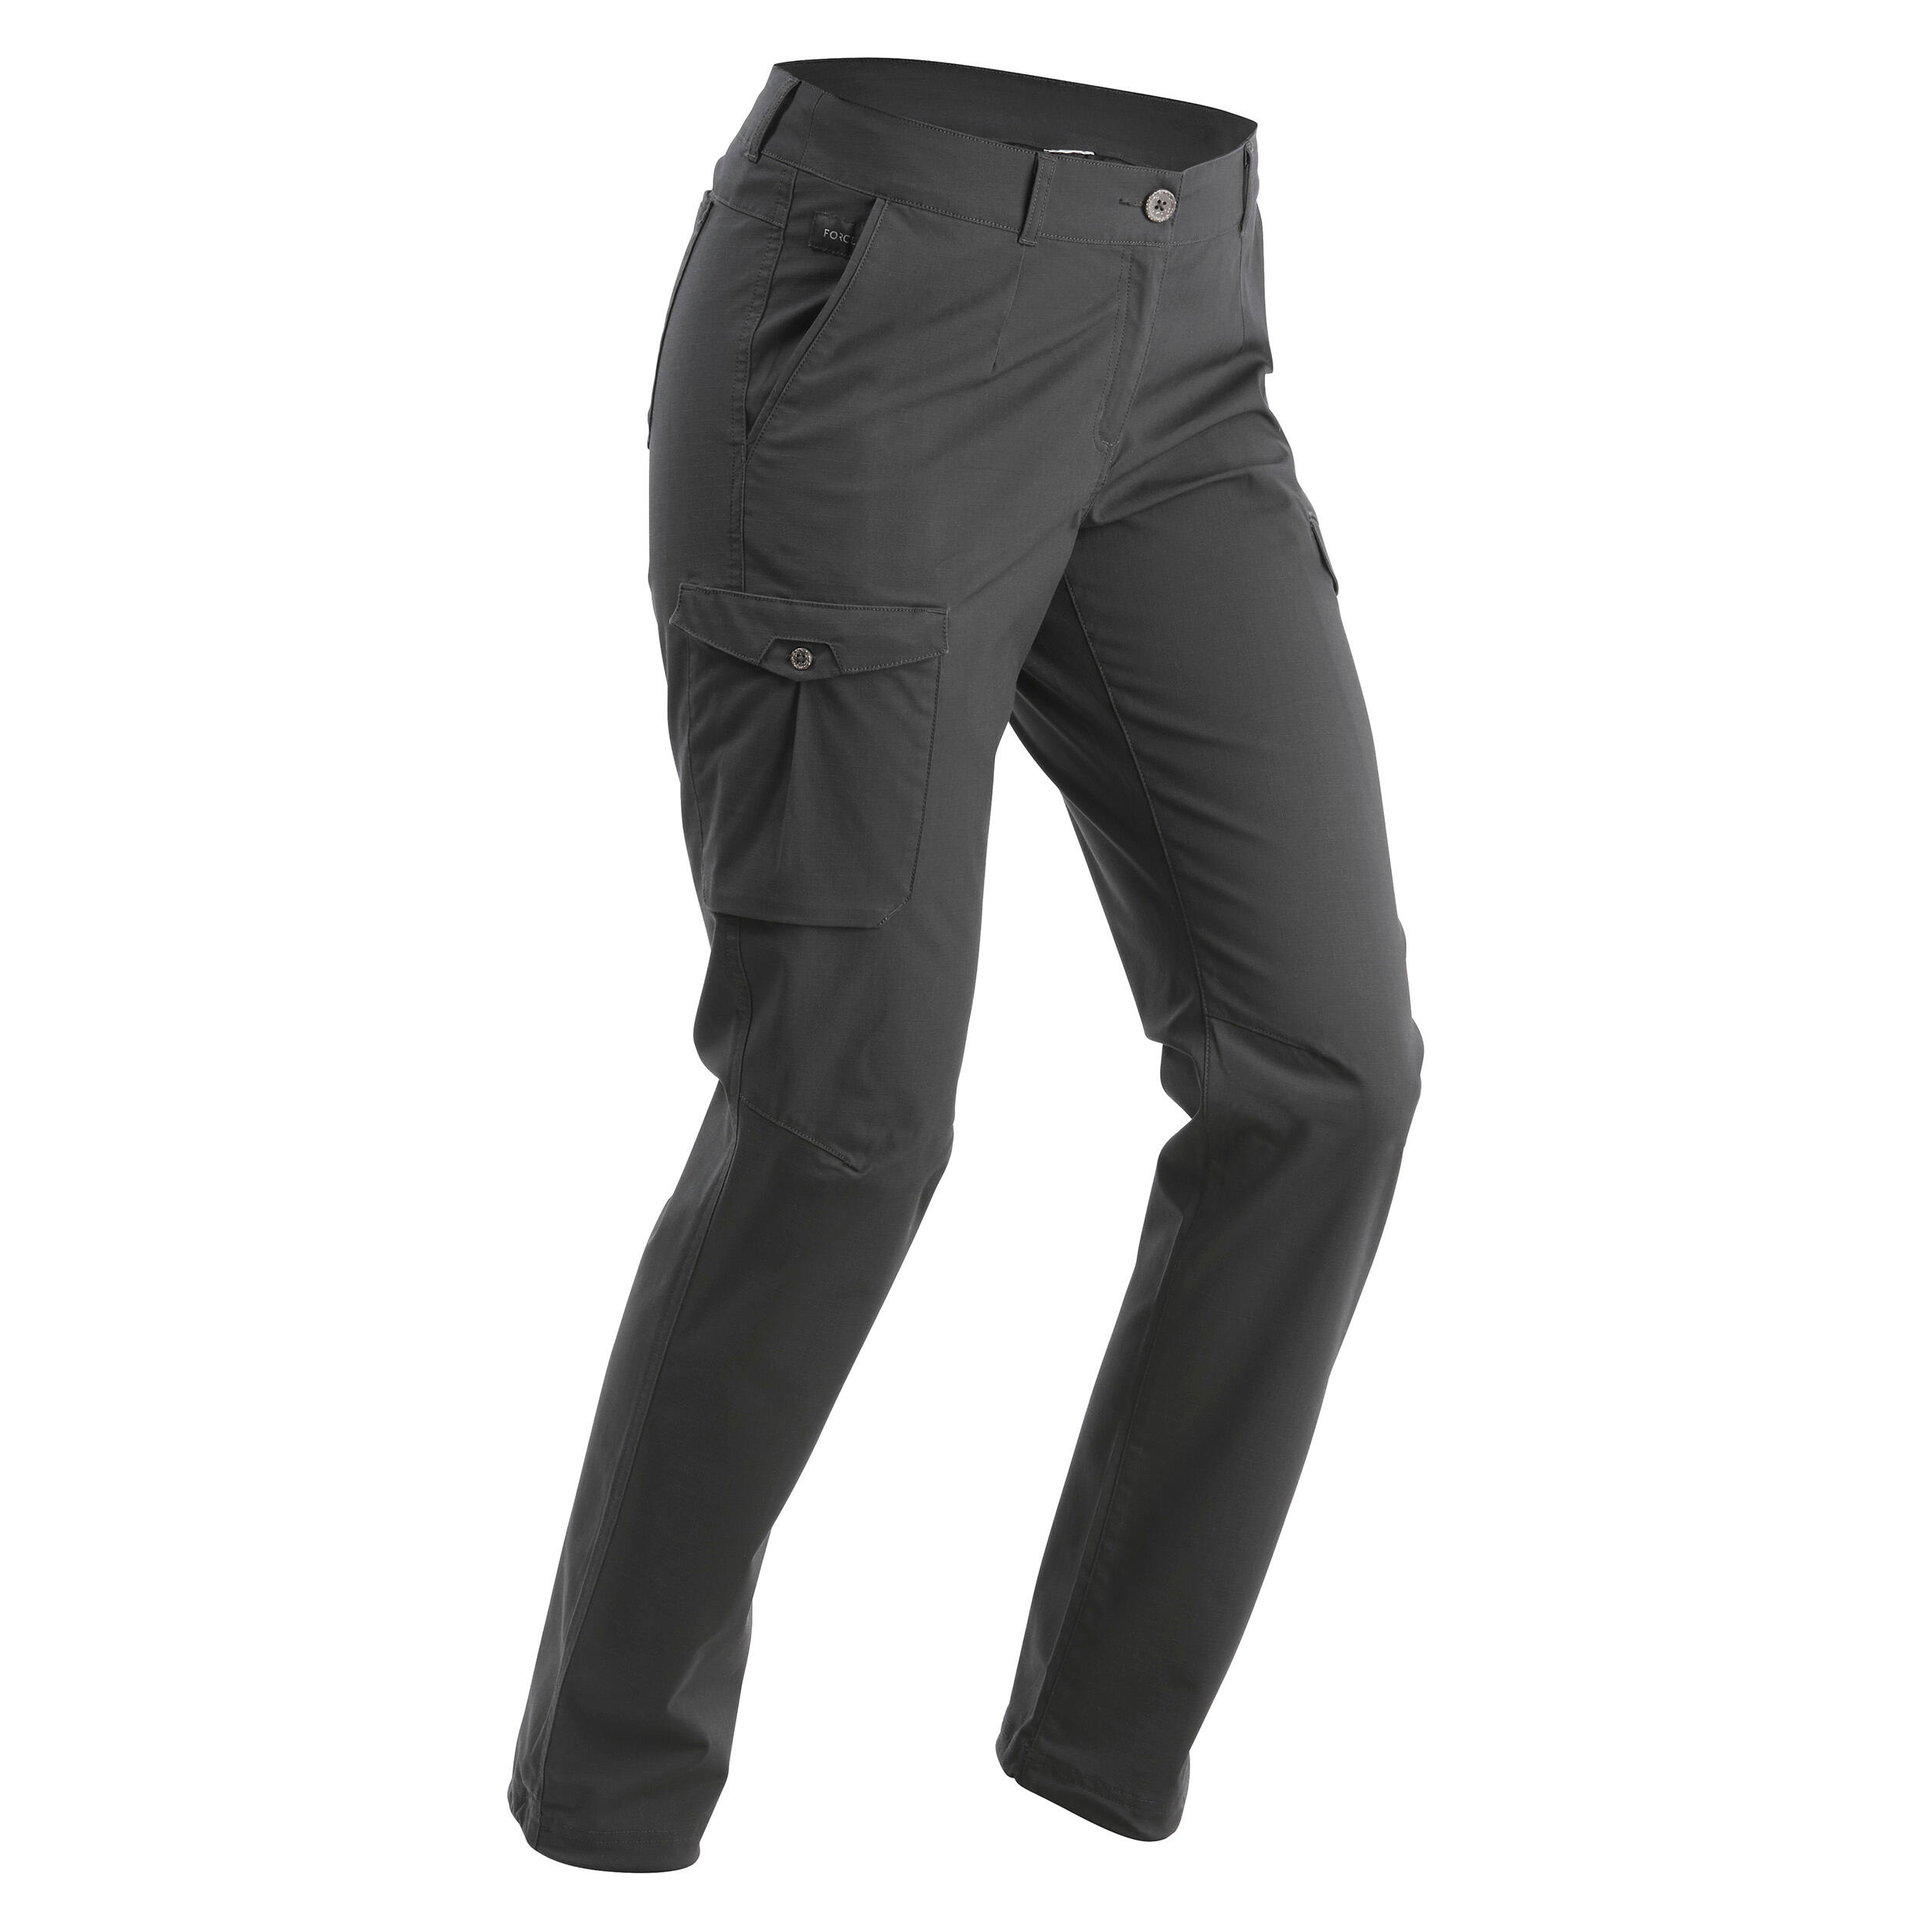 Kathmandu Ult-hike MNS Convertible Pants - Men's outdoor pants | SportFits  Shop